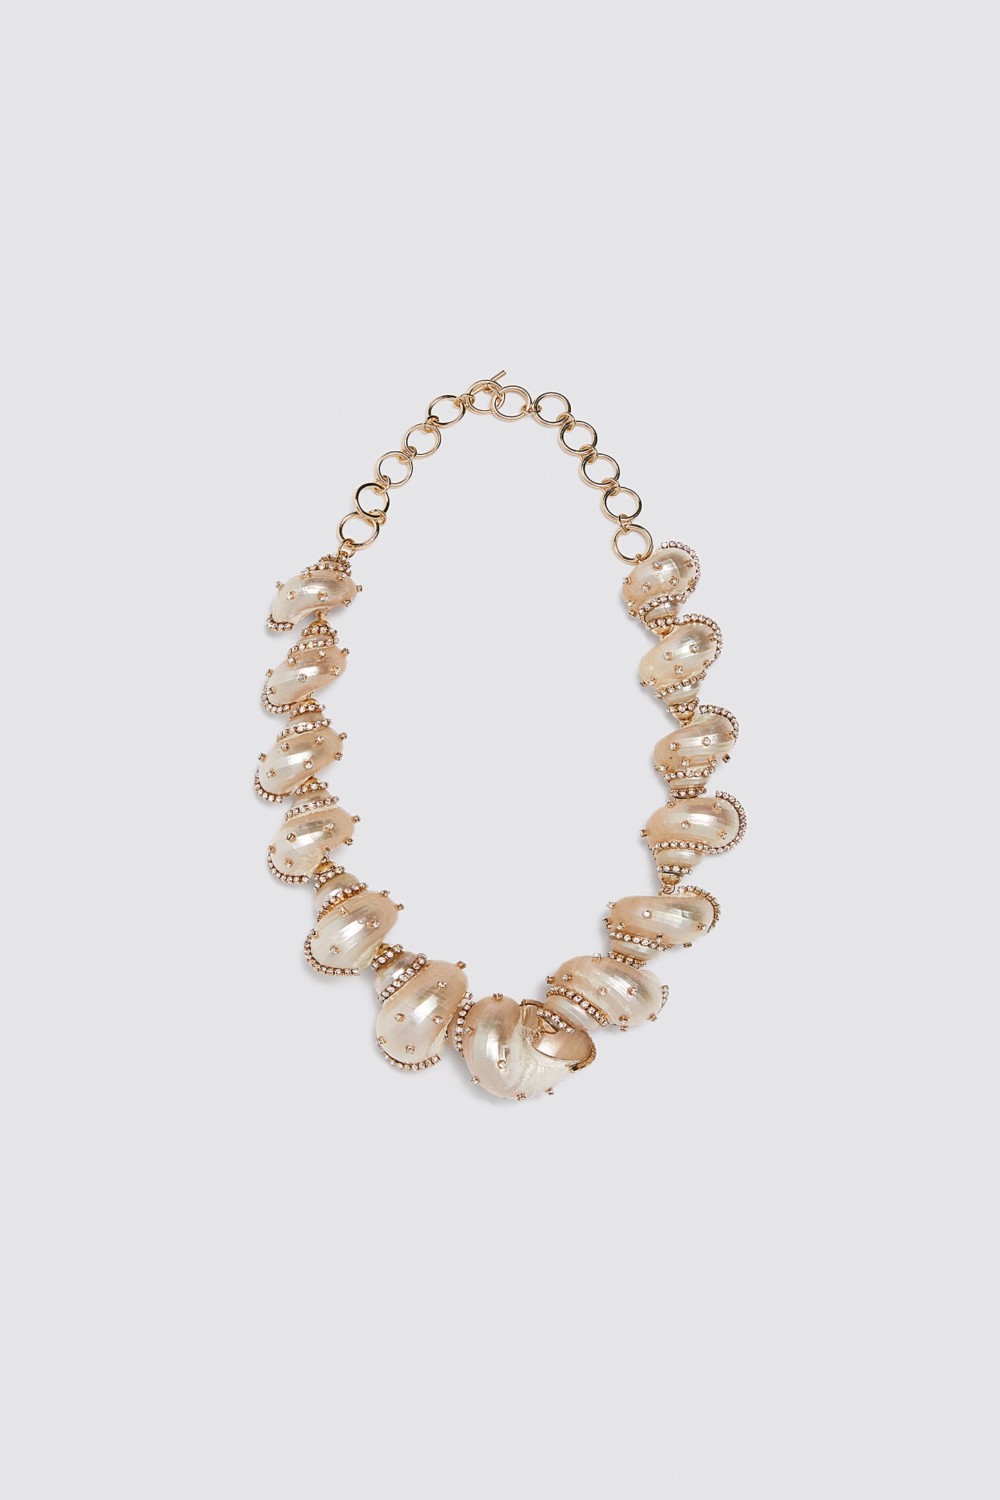 Fashion Blog Mode Tendance Ete 2020 Bijou Jewelry Zara Necklace Collier Coquillage Shell Strass Gold Or